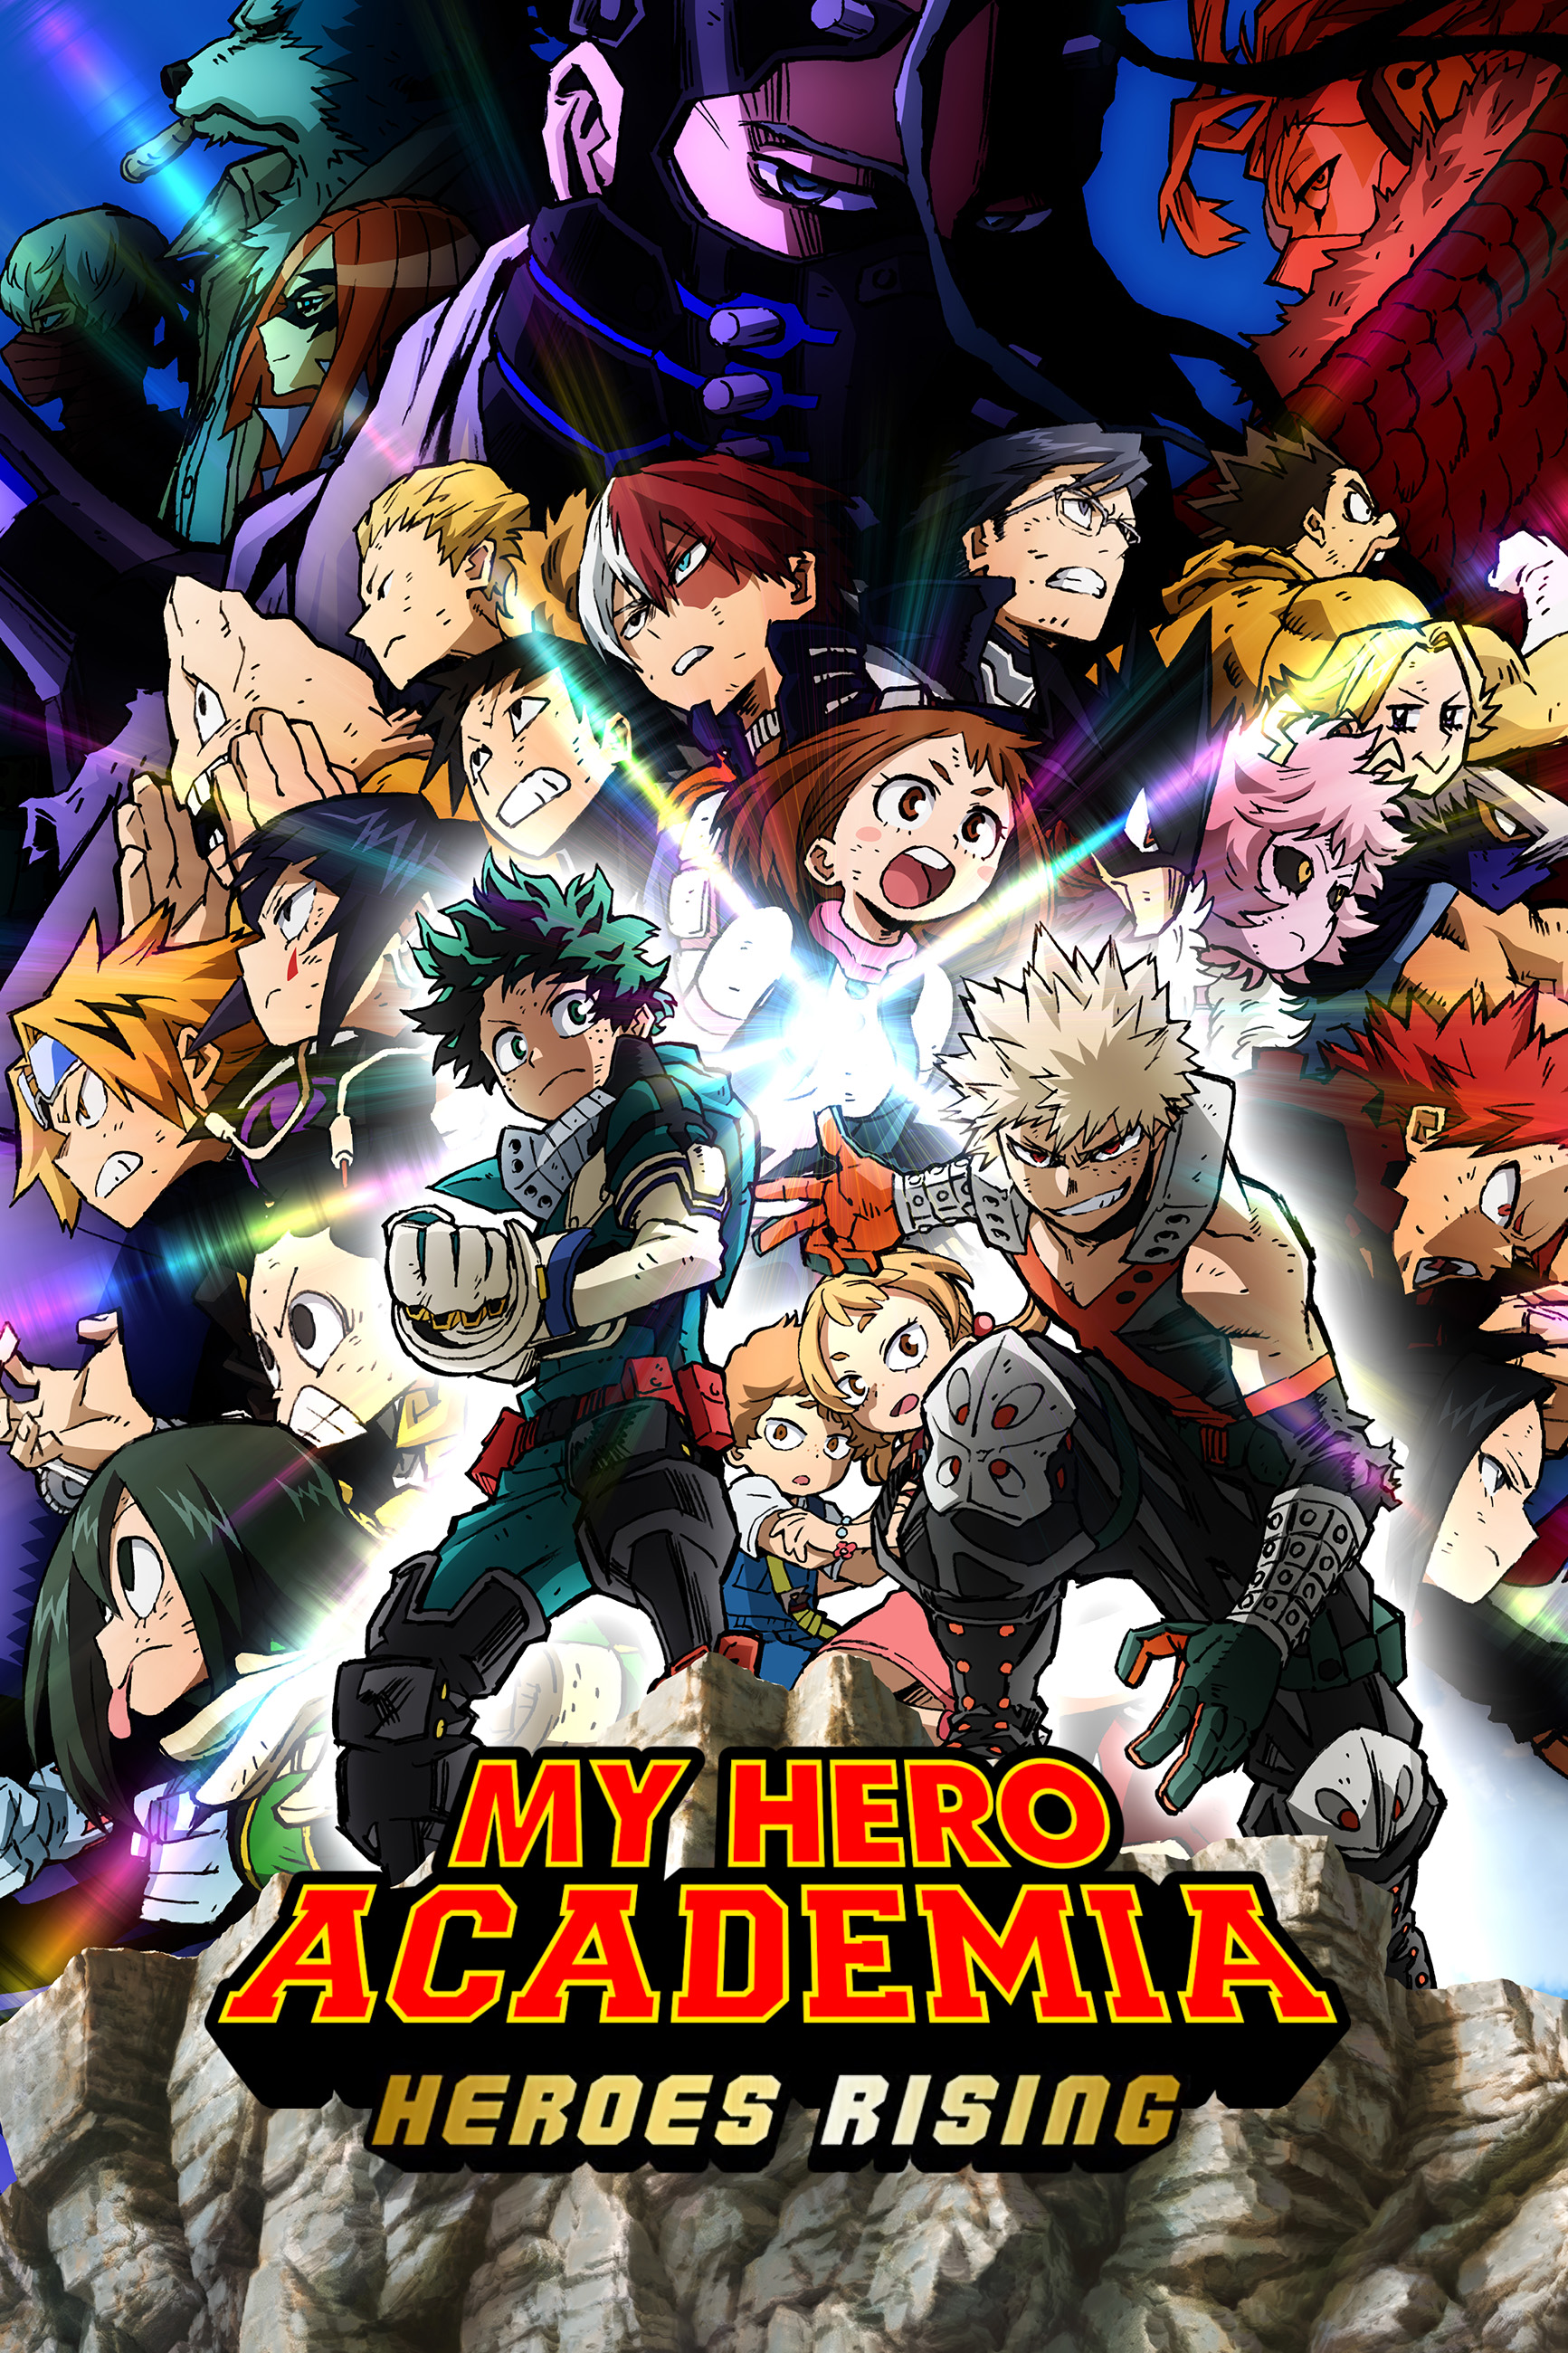 MHA World Heroes Mission Returns to Theaters With New Hawks OVA